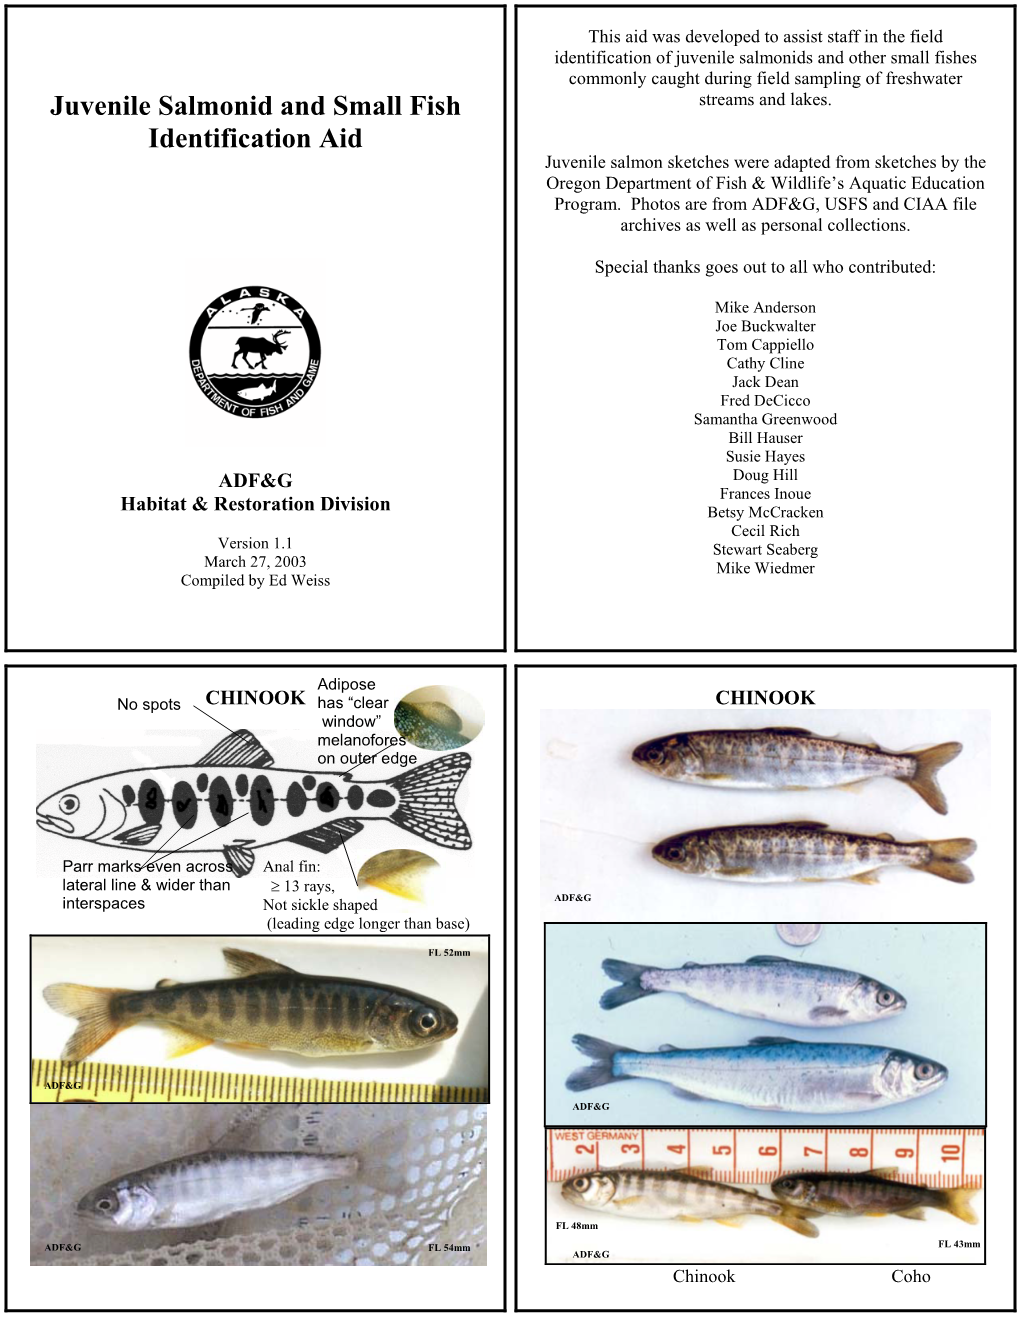 Juvenile Salmonid and Small Fish Identification